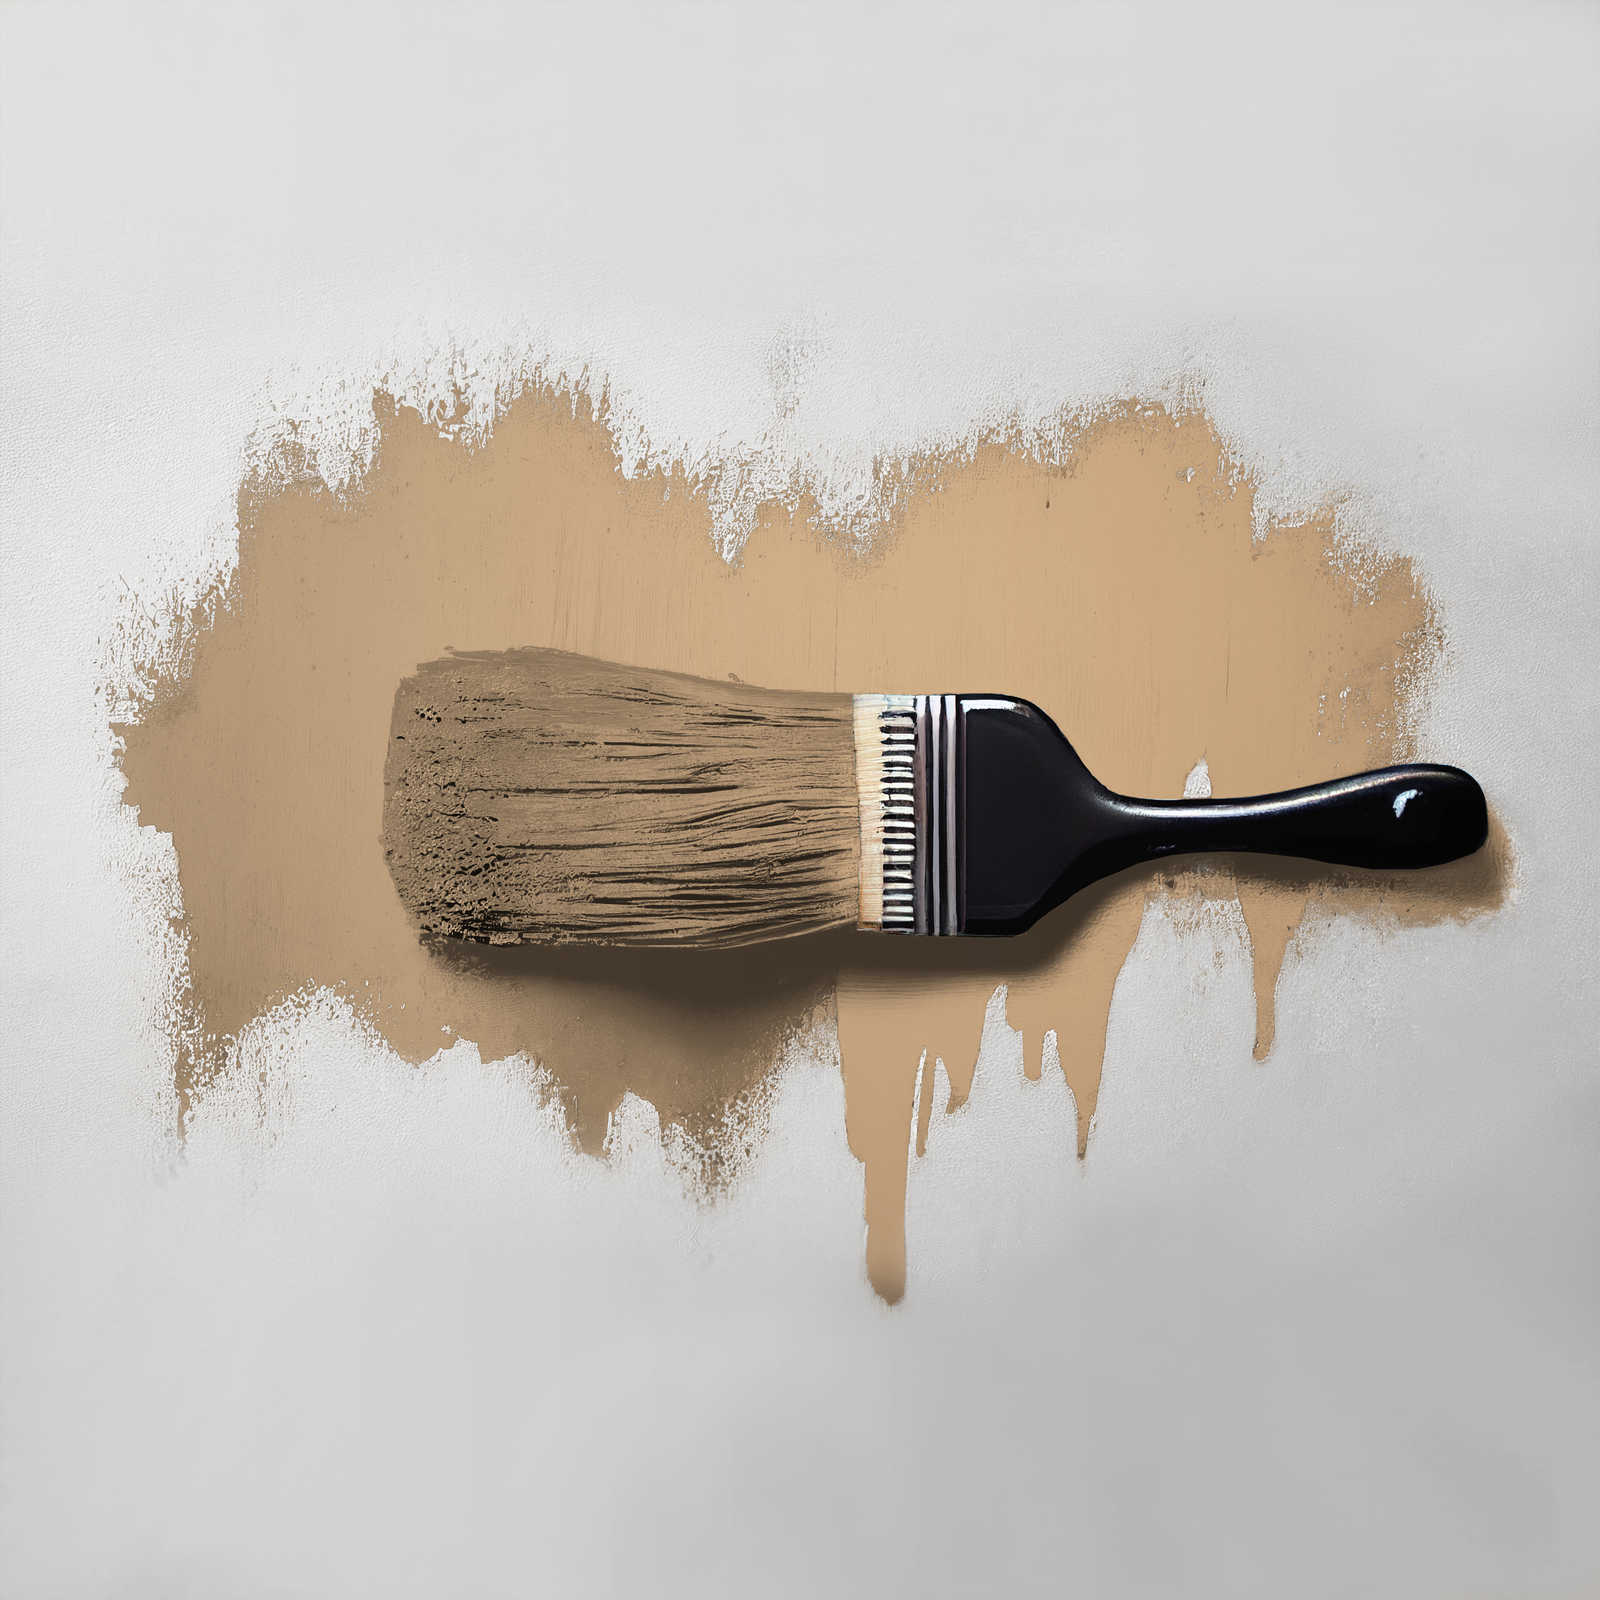             Pittura murale TCK6004 »Active Almond« in accogliente beige marrone – 2,5 litri
        